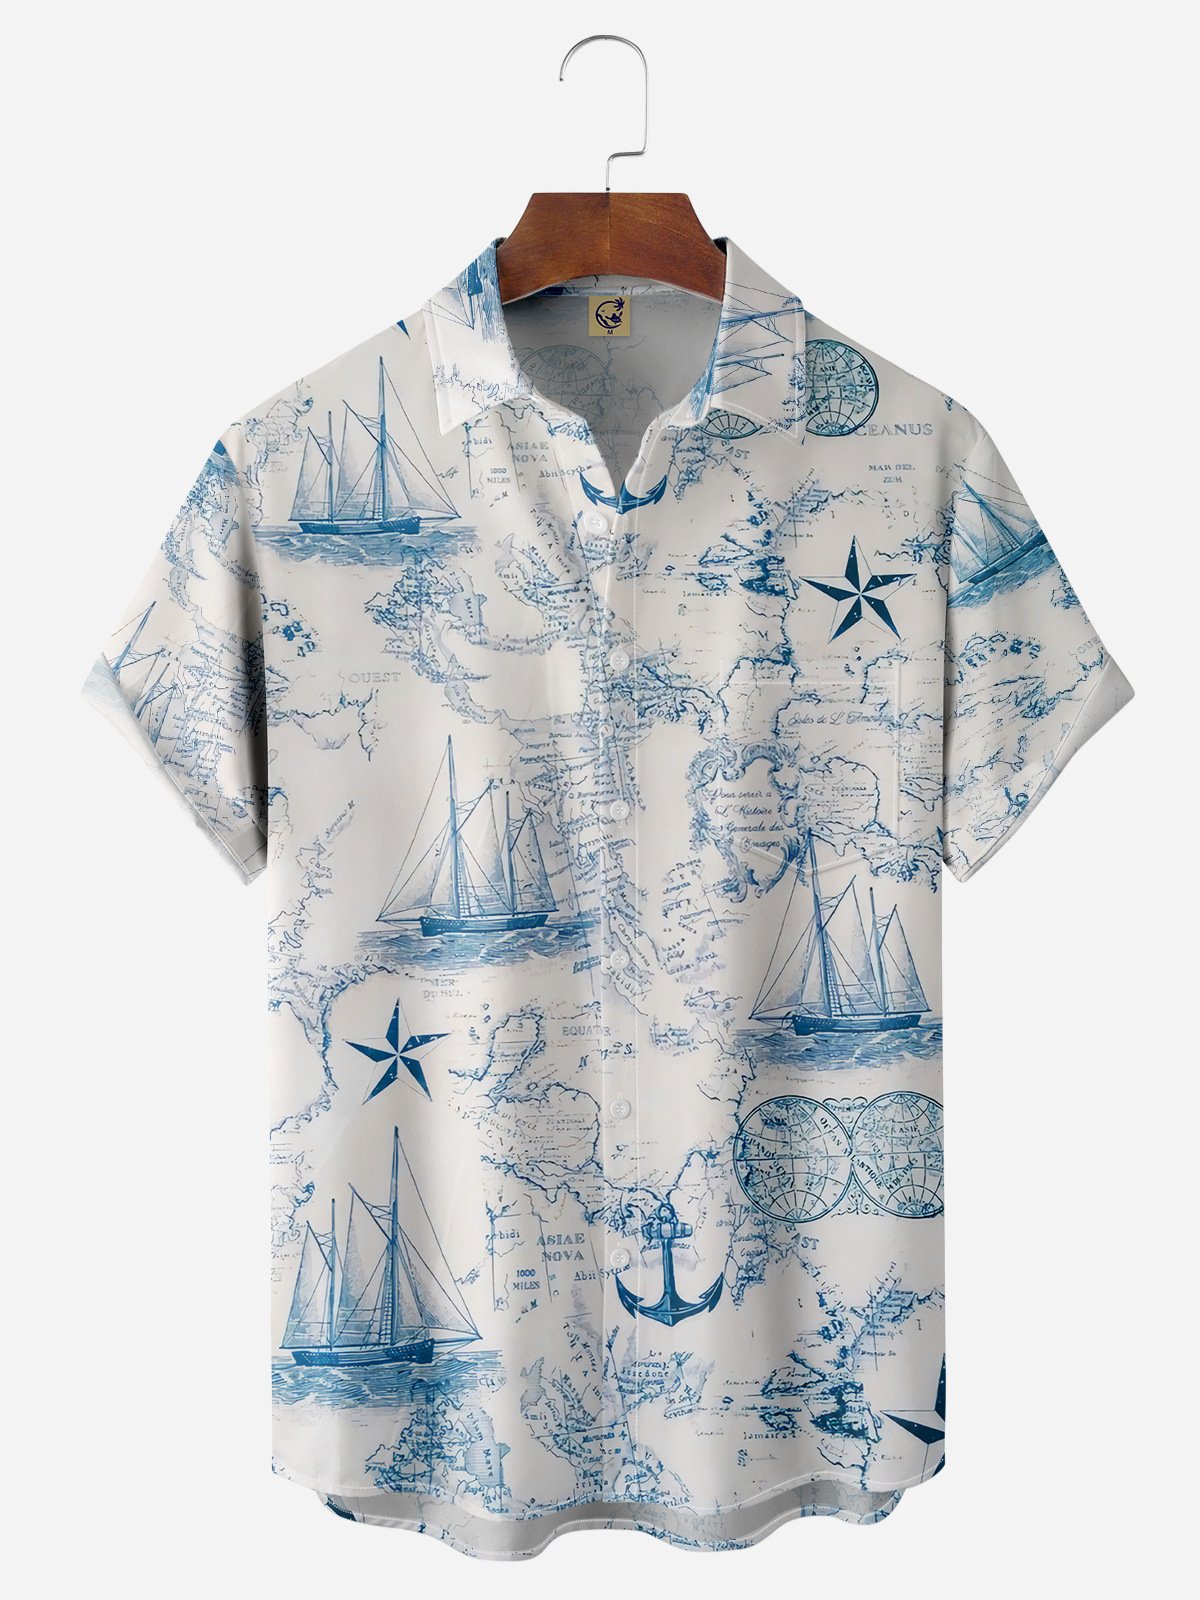 Hardaddy Map Sailing Chest Pocket Short Sleeves Hawaiian Nautical Shirts